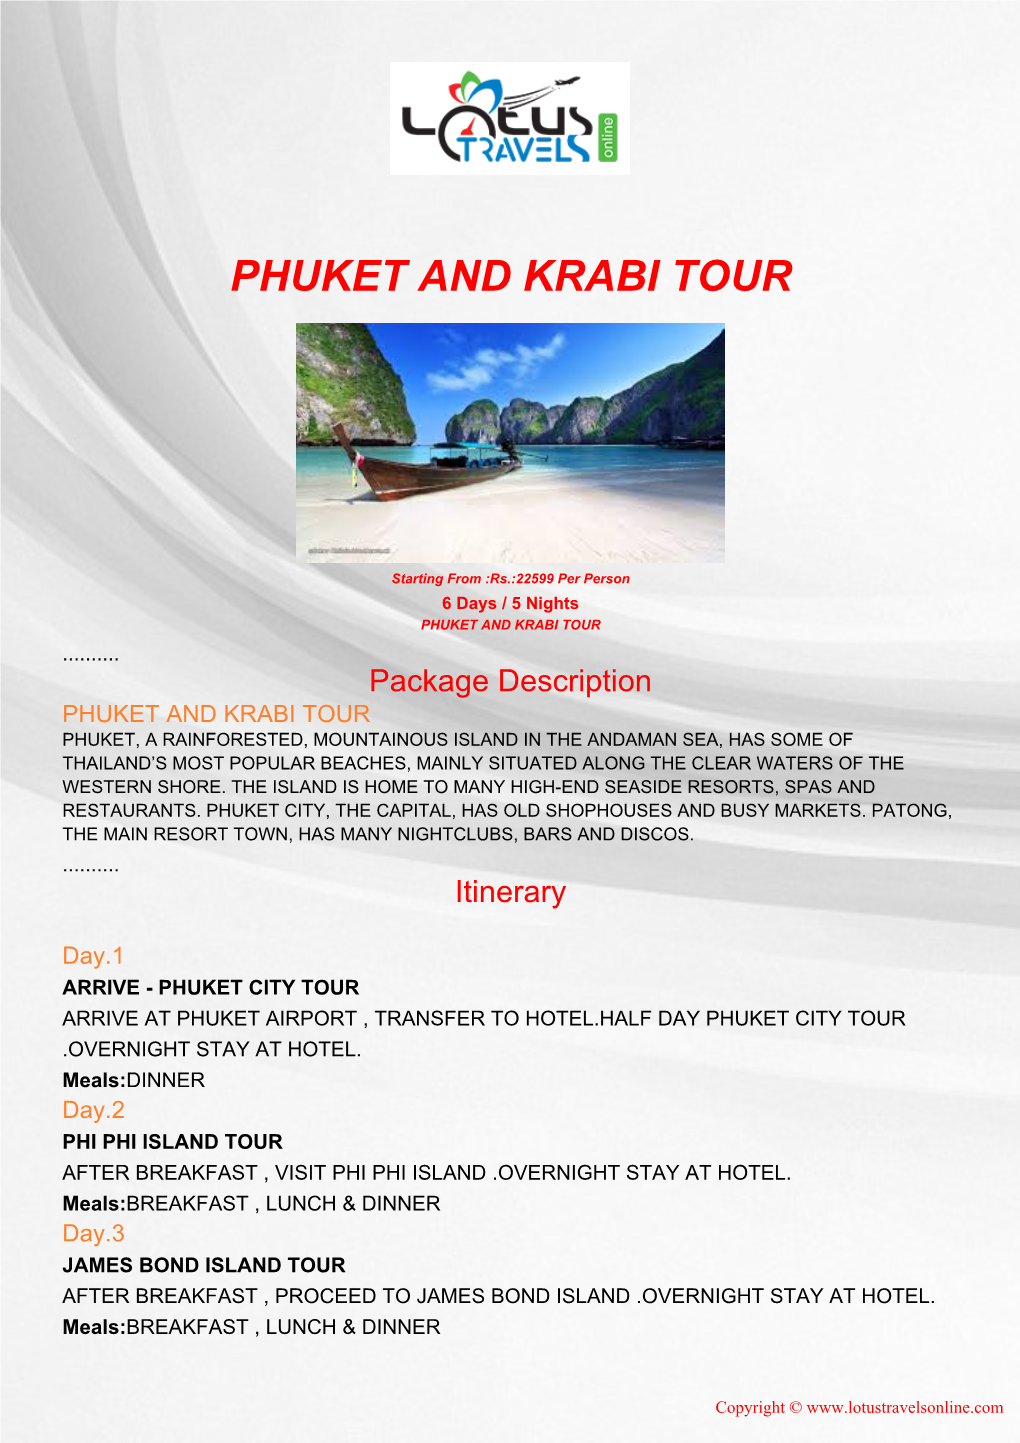 Phuket and Krabi Tour